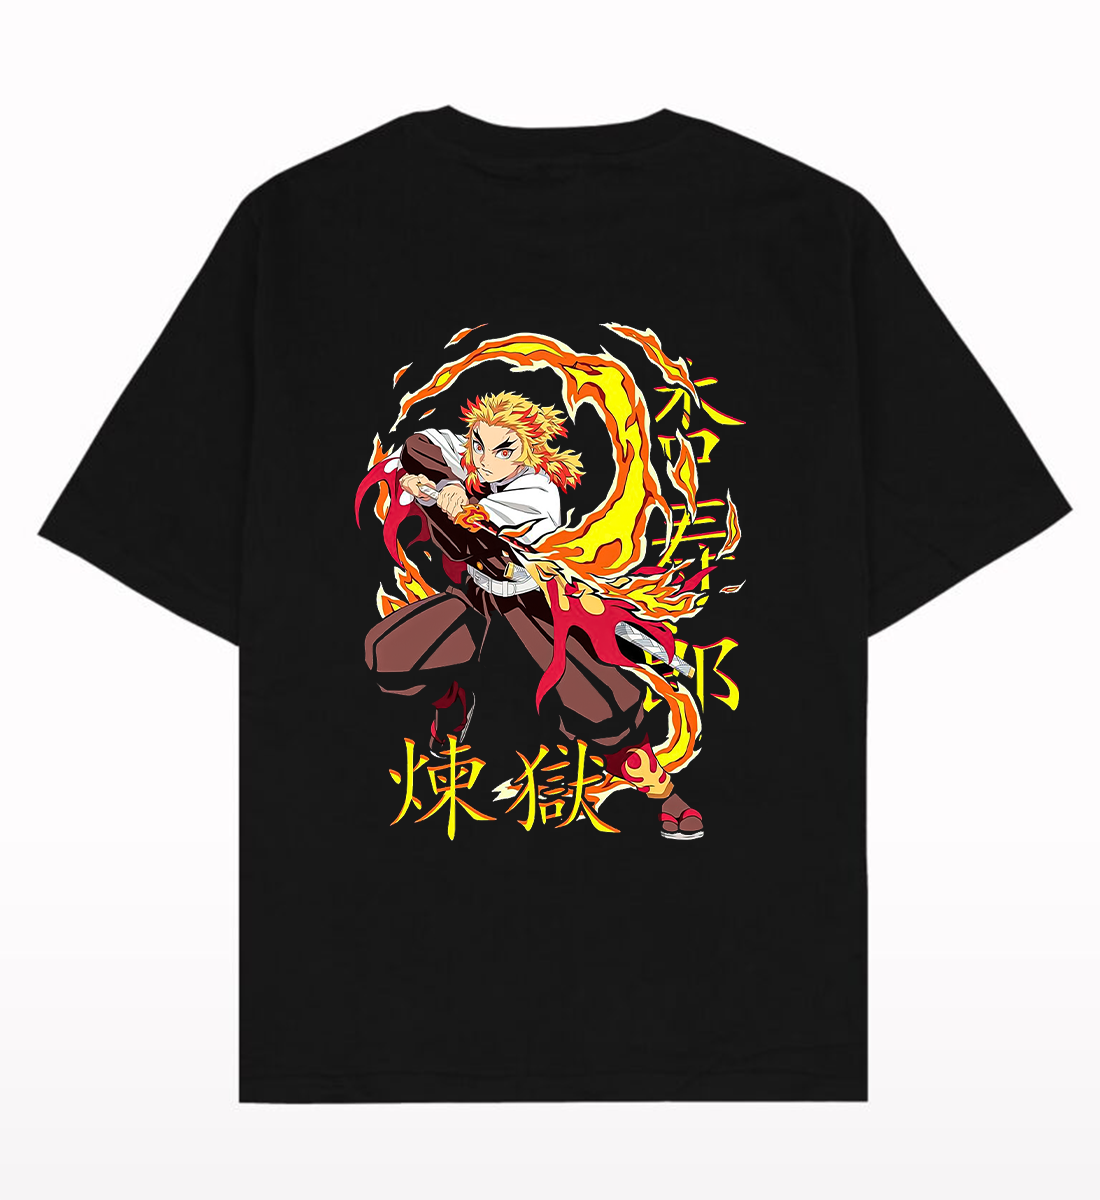 Rengoku Kyojuro Demon Slayer Anime Oversized T-Shirt